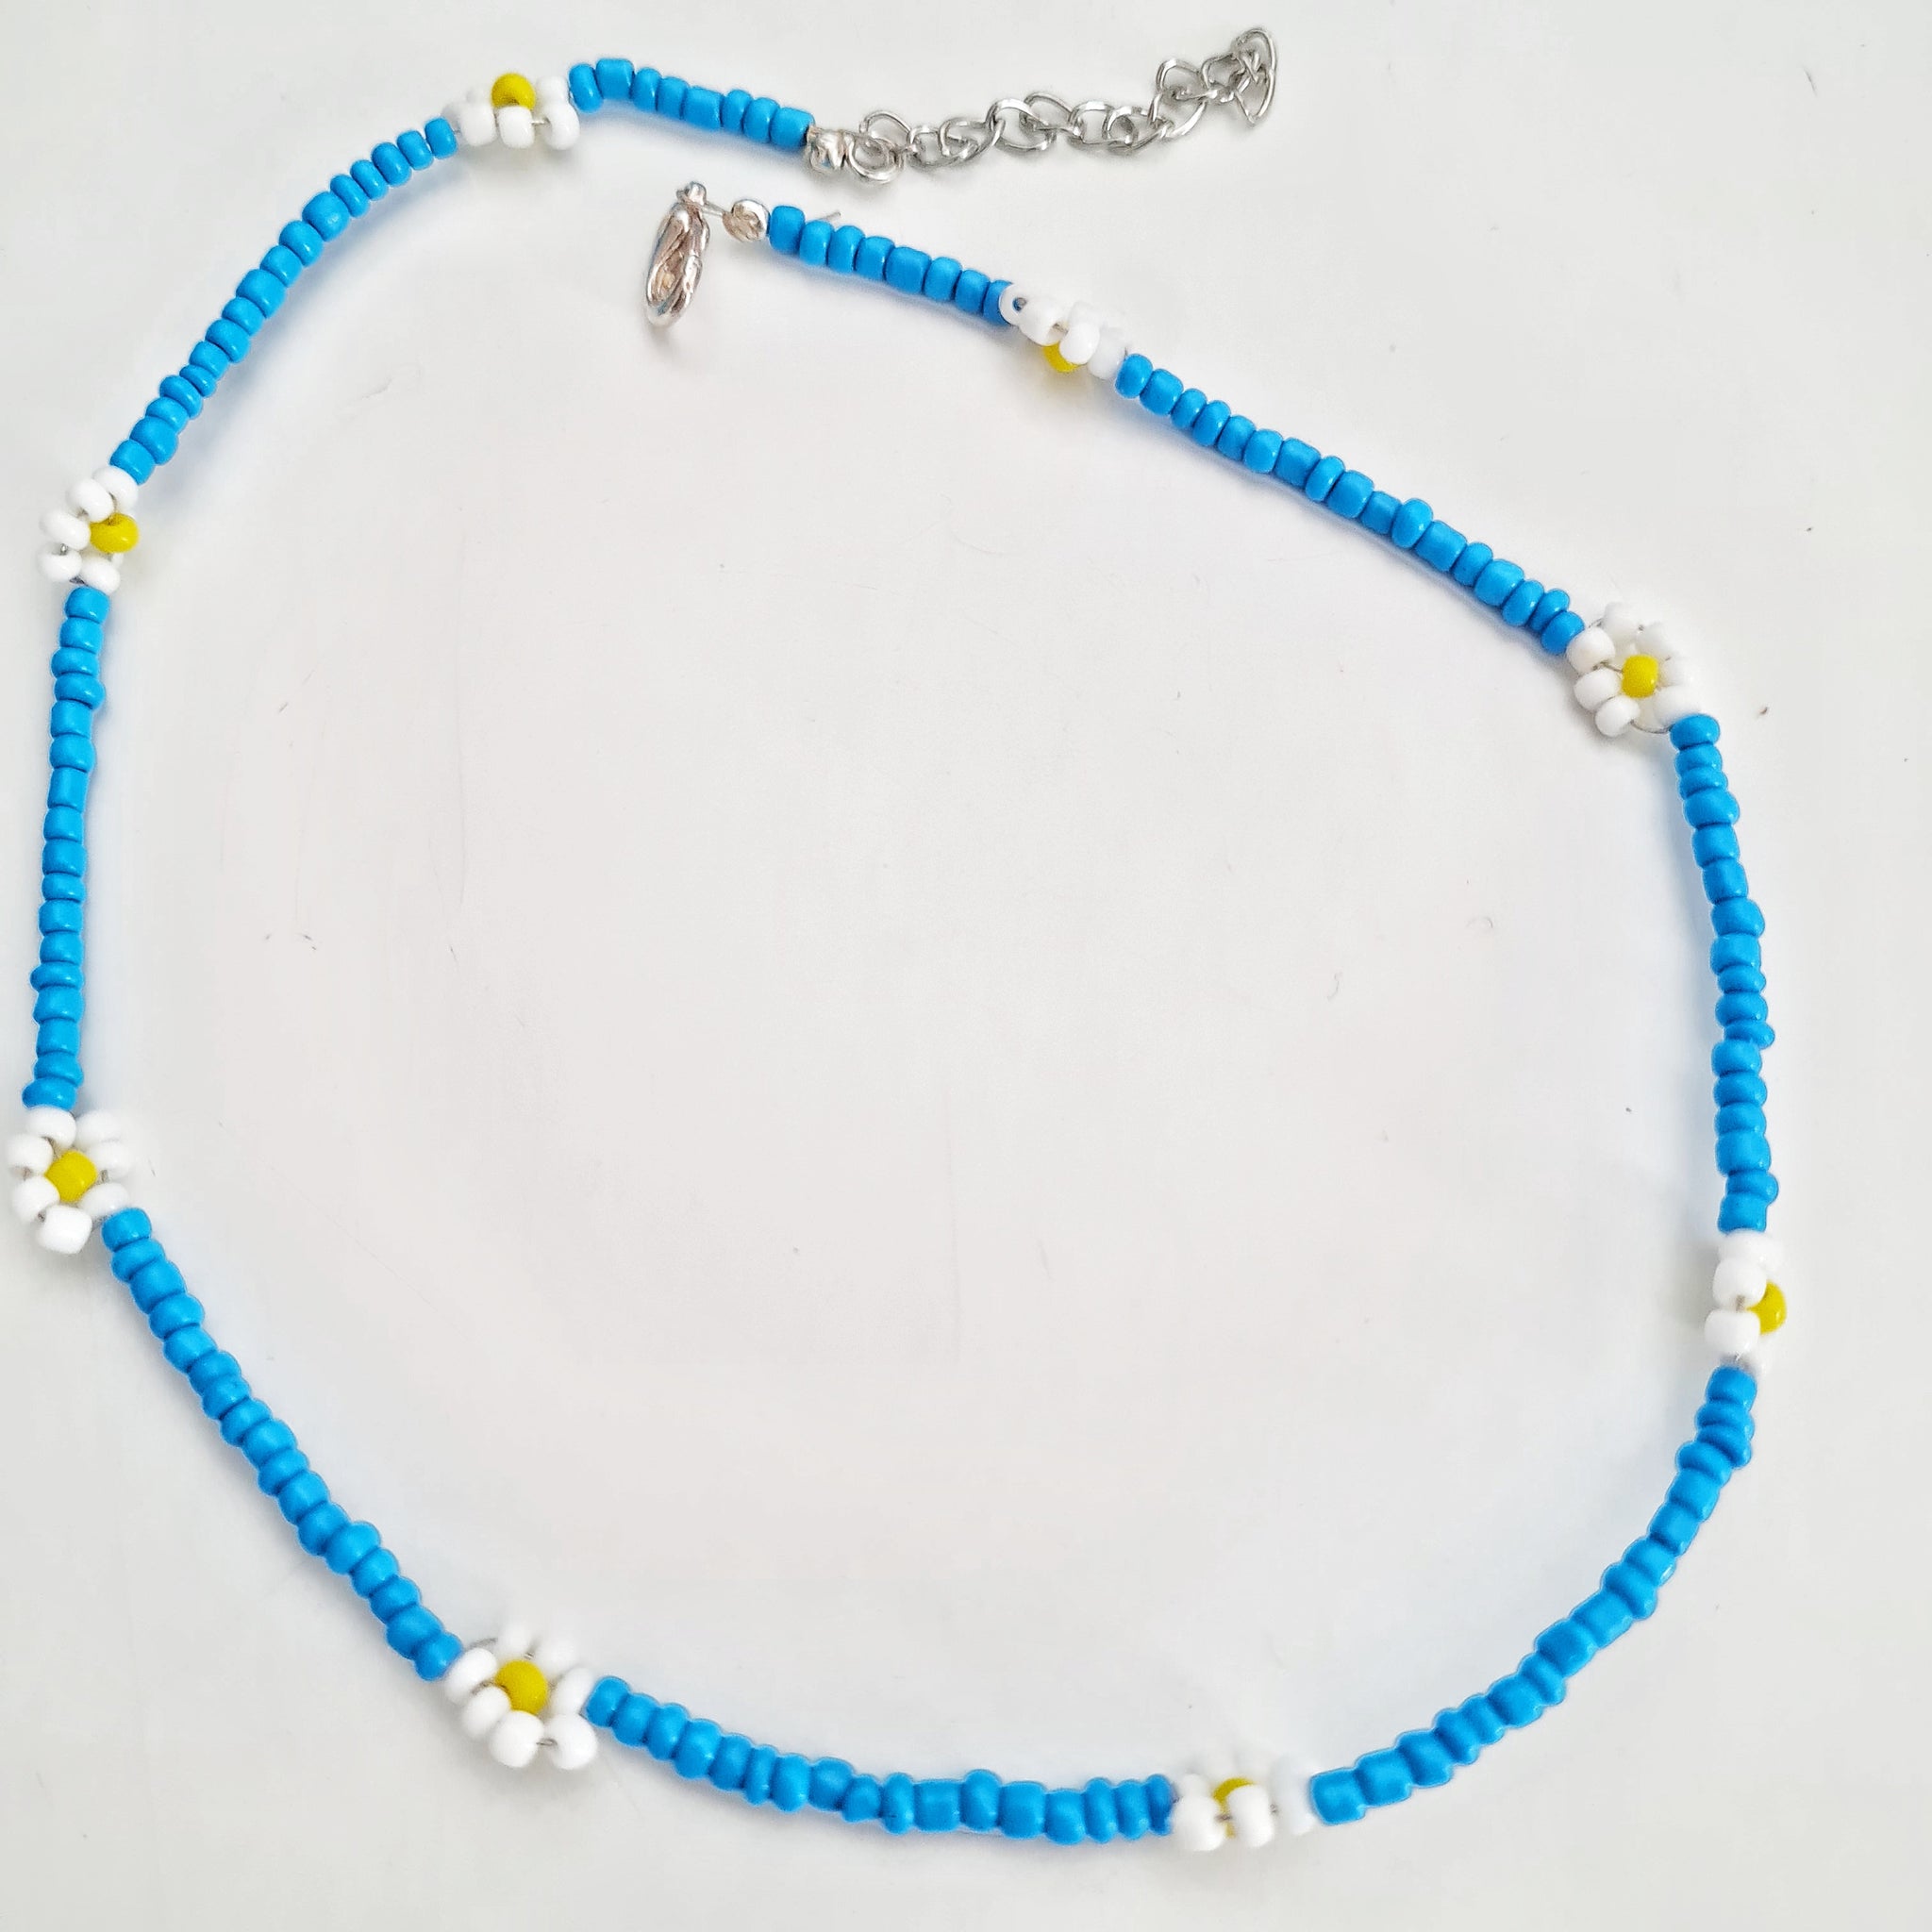 Sophia Range - Blue glass beads with flowers